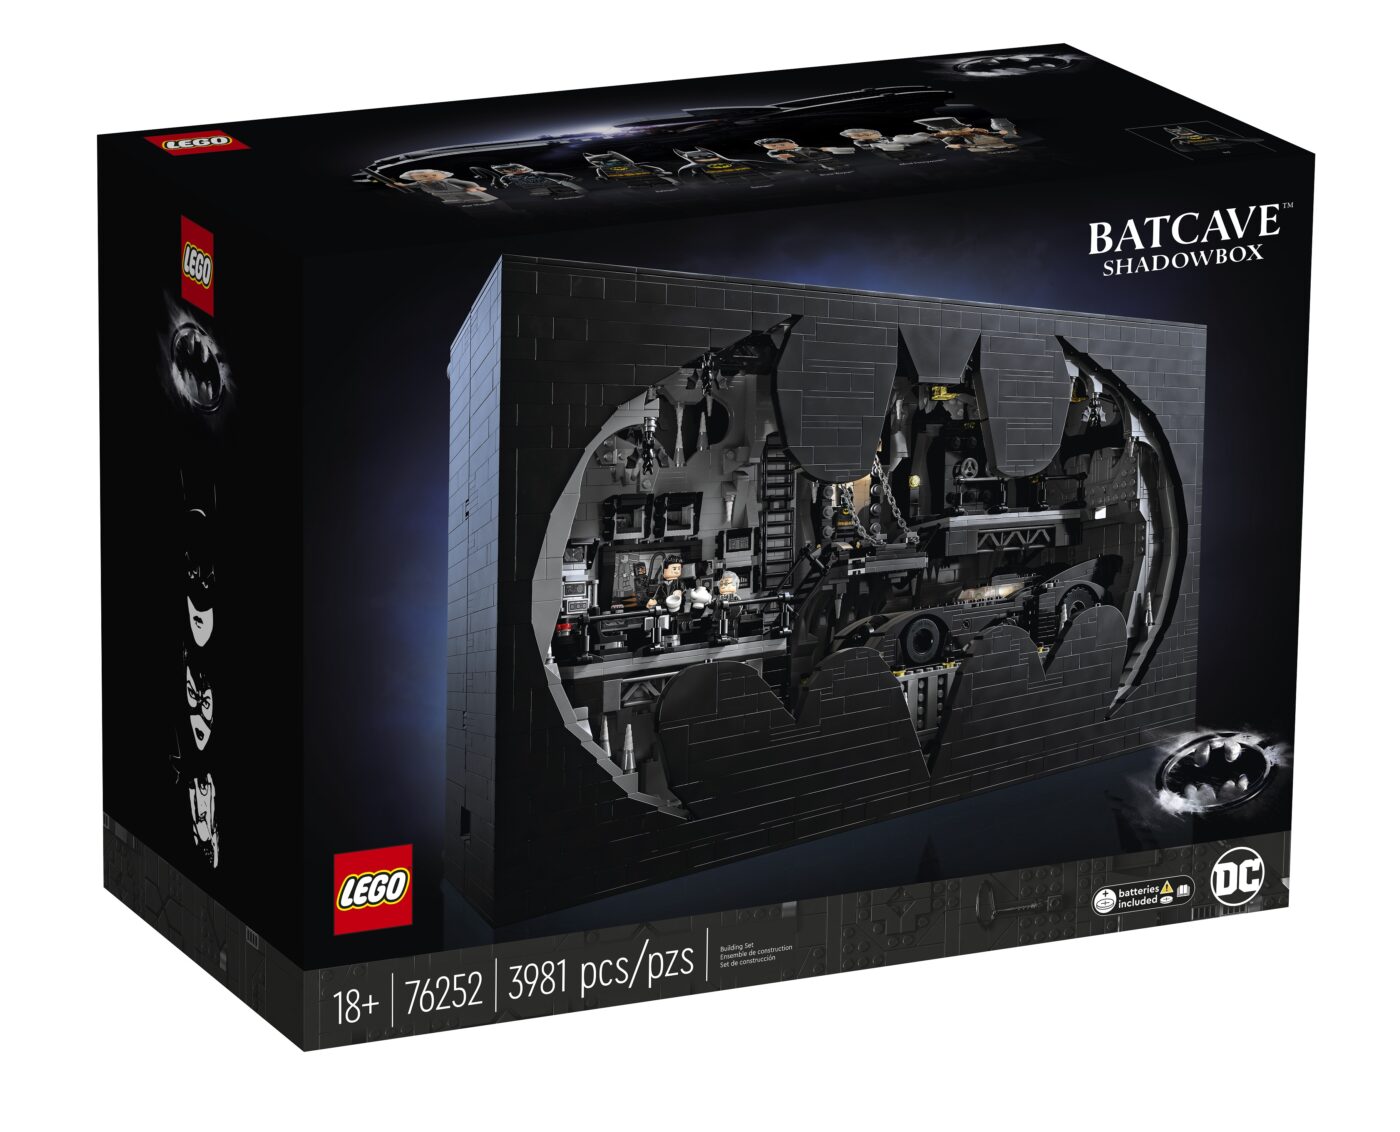 LEGO 76252 Batcave Shadow Box celebrates Batman Returns with a display box concept - Jay's Brick Blog